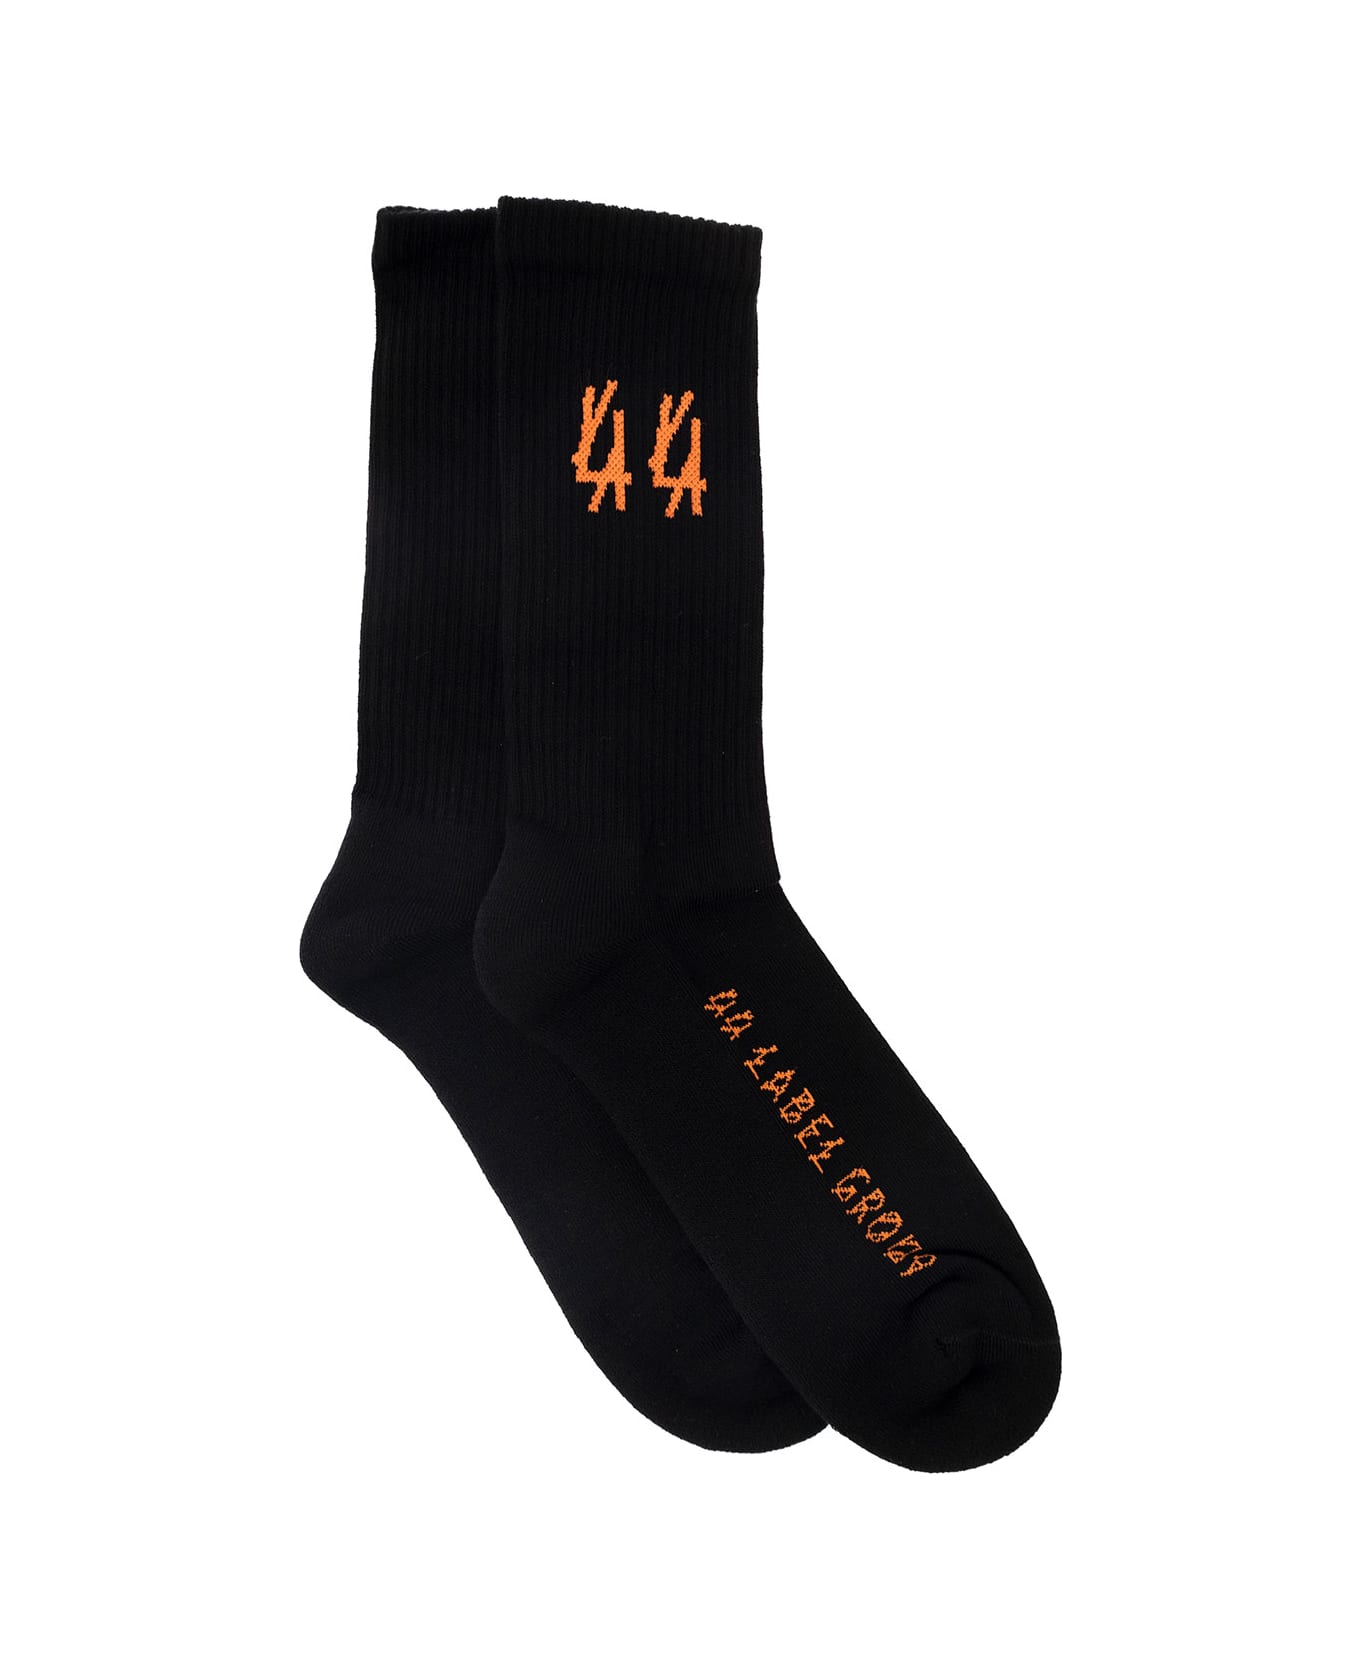 44 Label Group Black Socks With Contrasting Logo Detail In Cotton Blend Man - Black 靴下